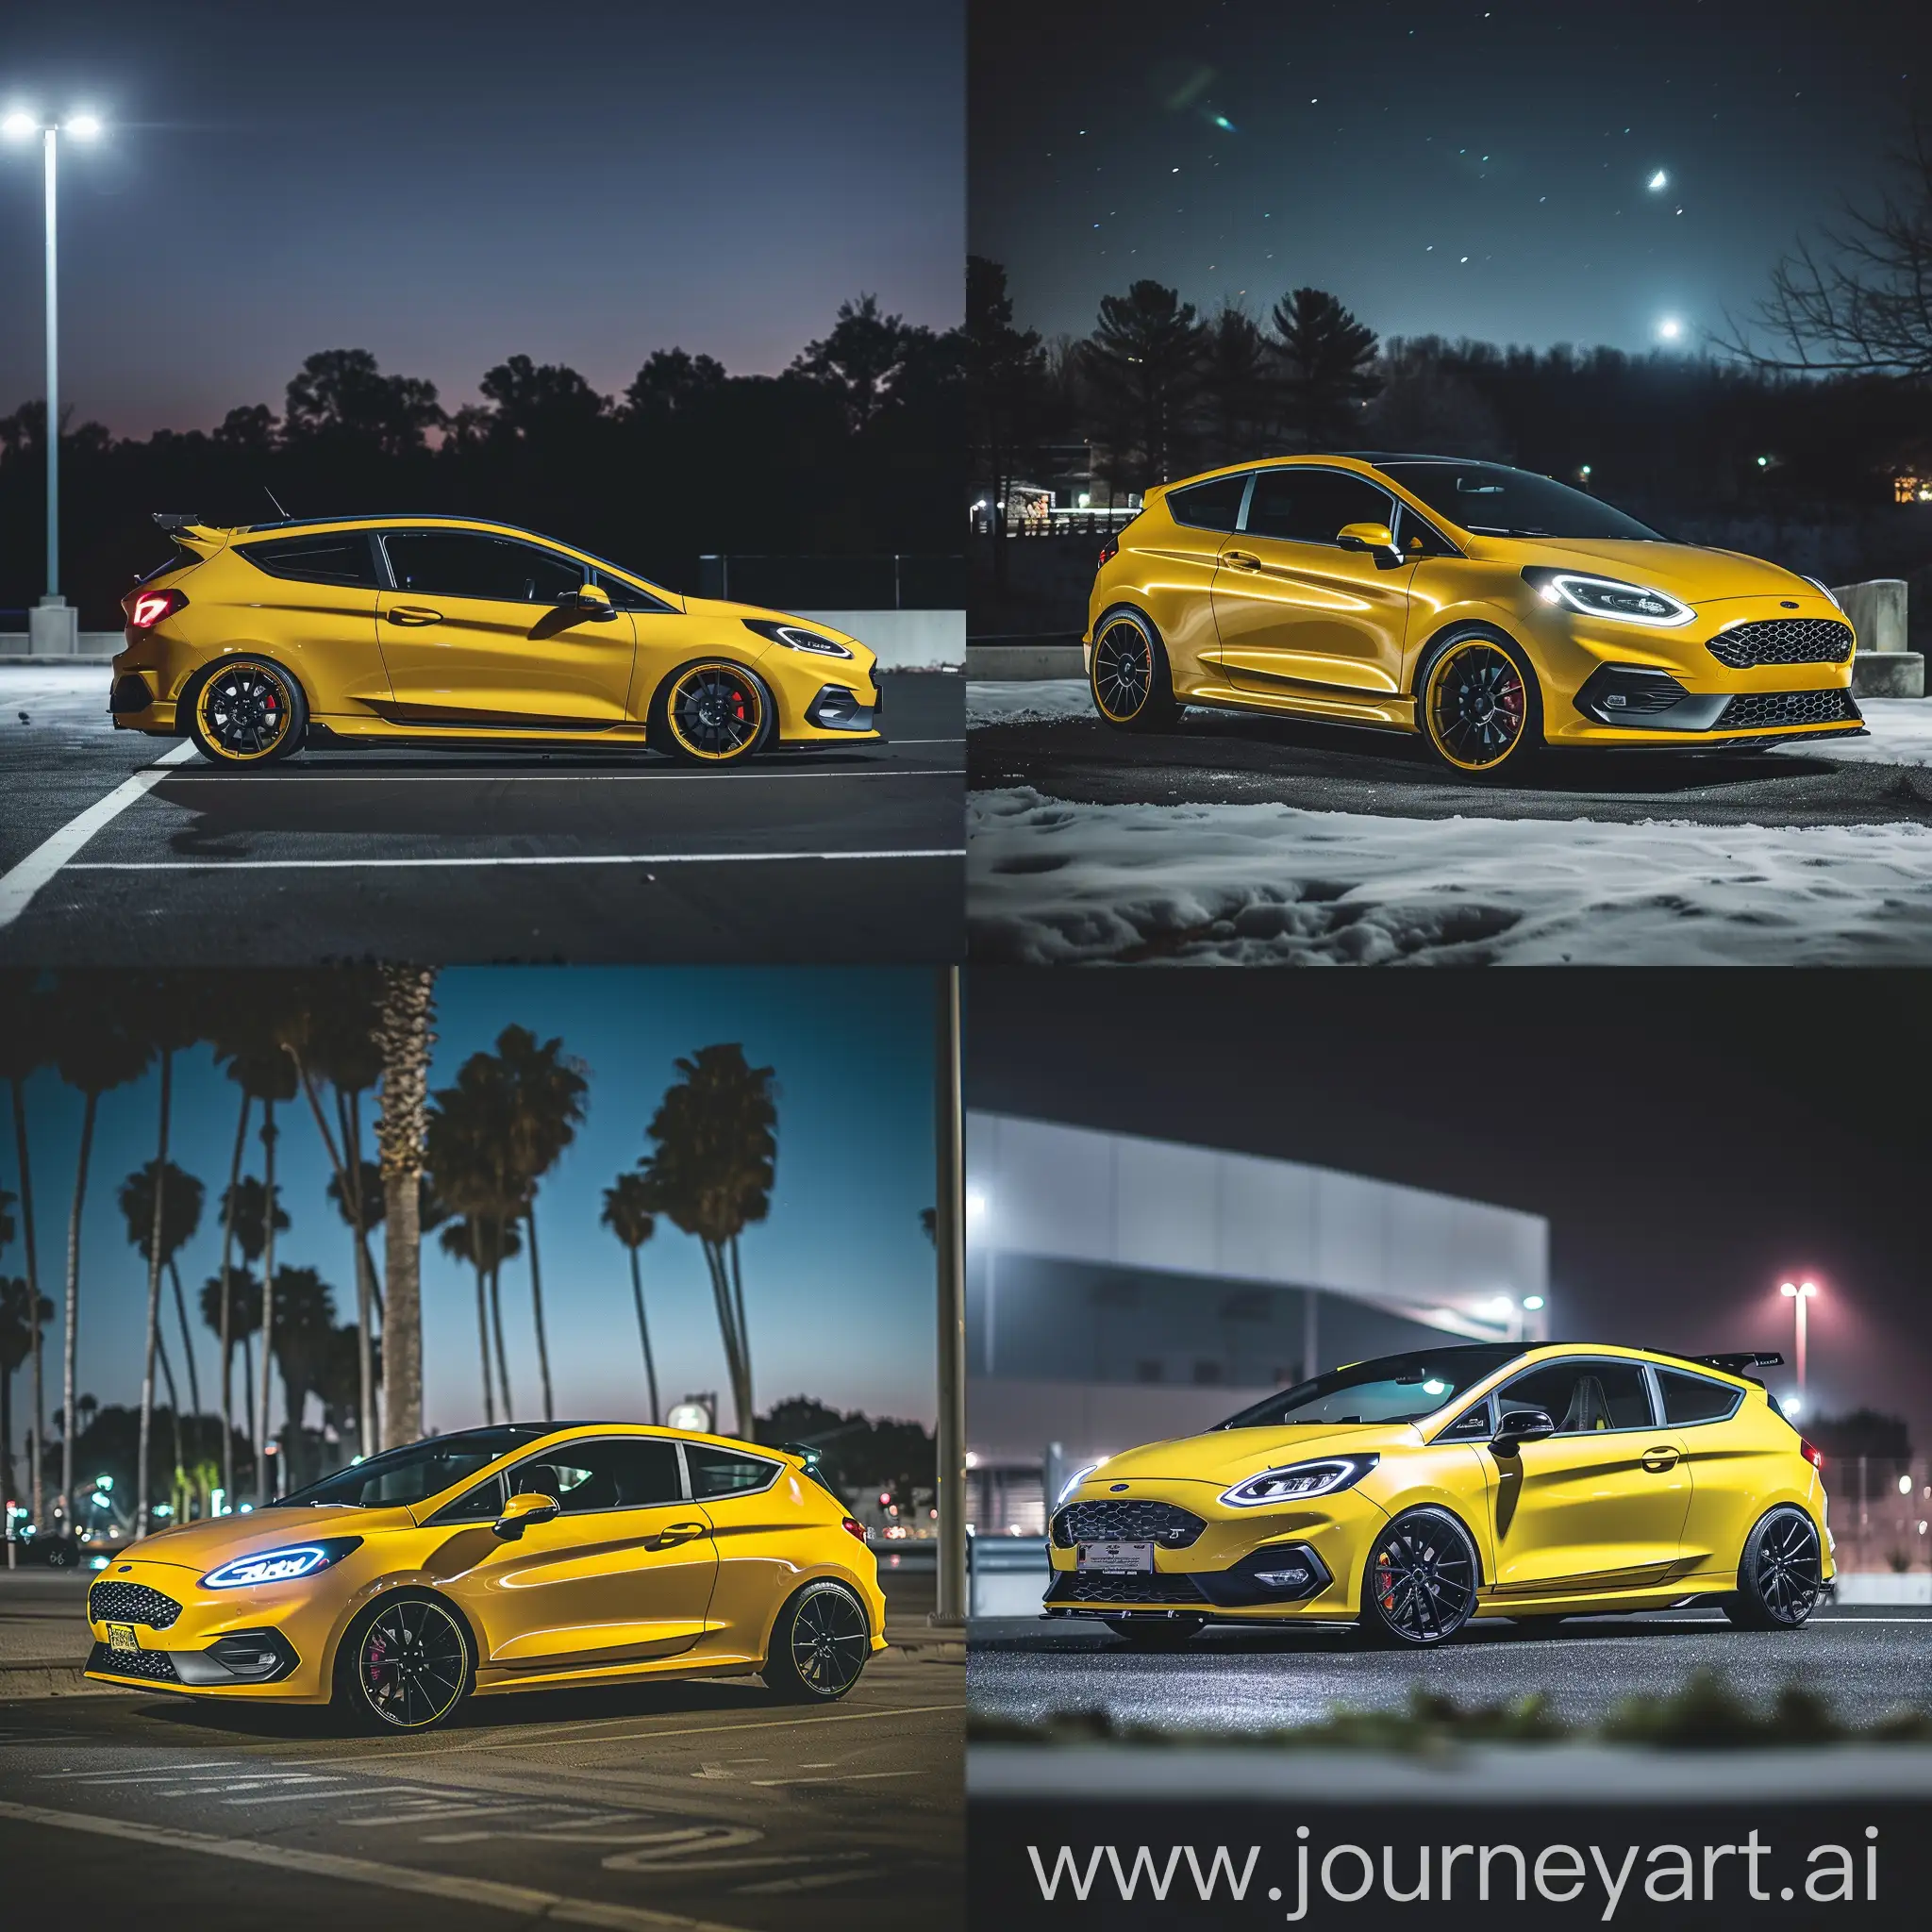 Sleek-Ford-Fiesta-ST-2020-Night-Car-Meet-with-Striking-Yellow-and-Black-Aesthetics